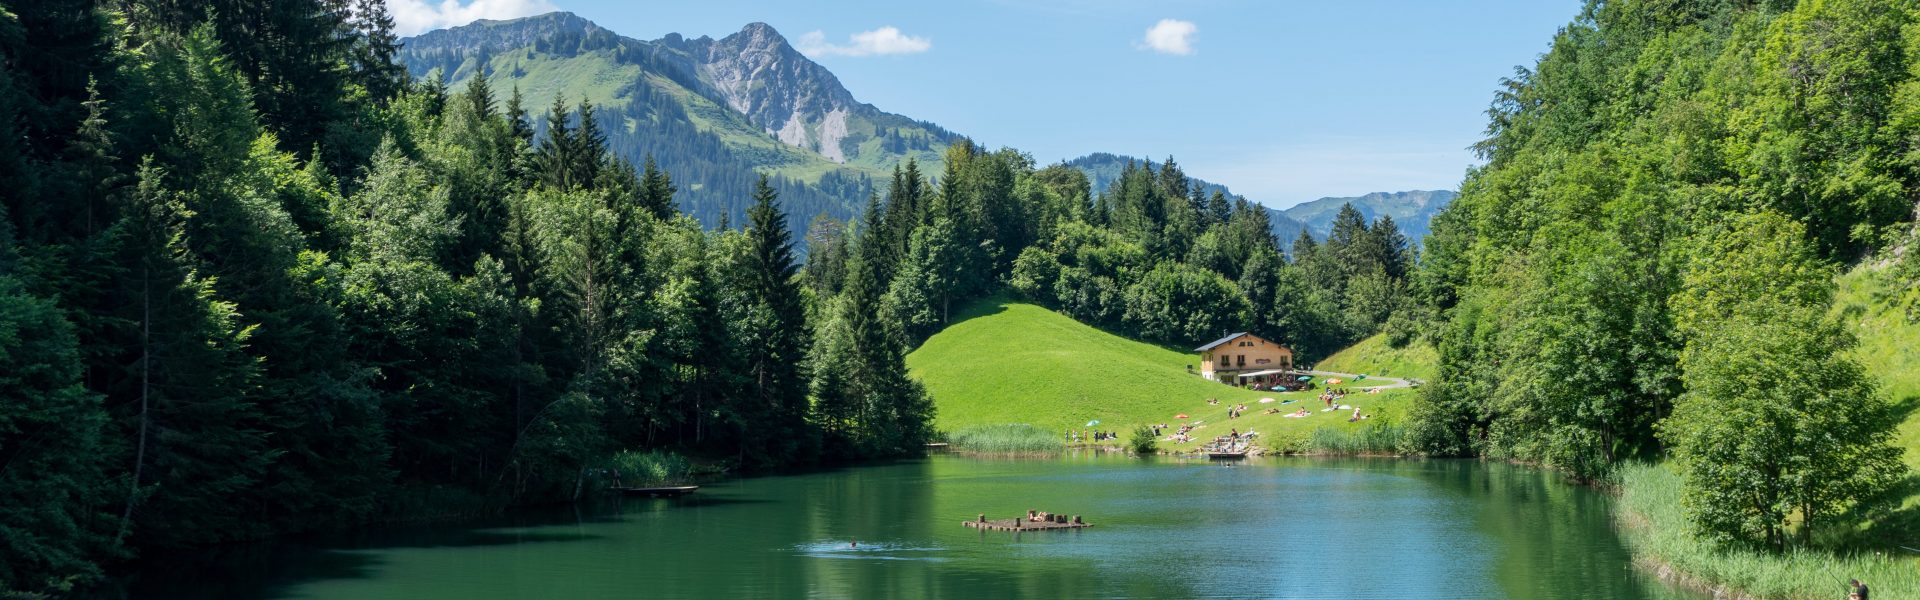 Familienausflug Seewaldsee, Biosphärenpark Großes Walsertal (c) Verena Hetzenauer I Vorarlberg Tourismus